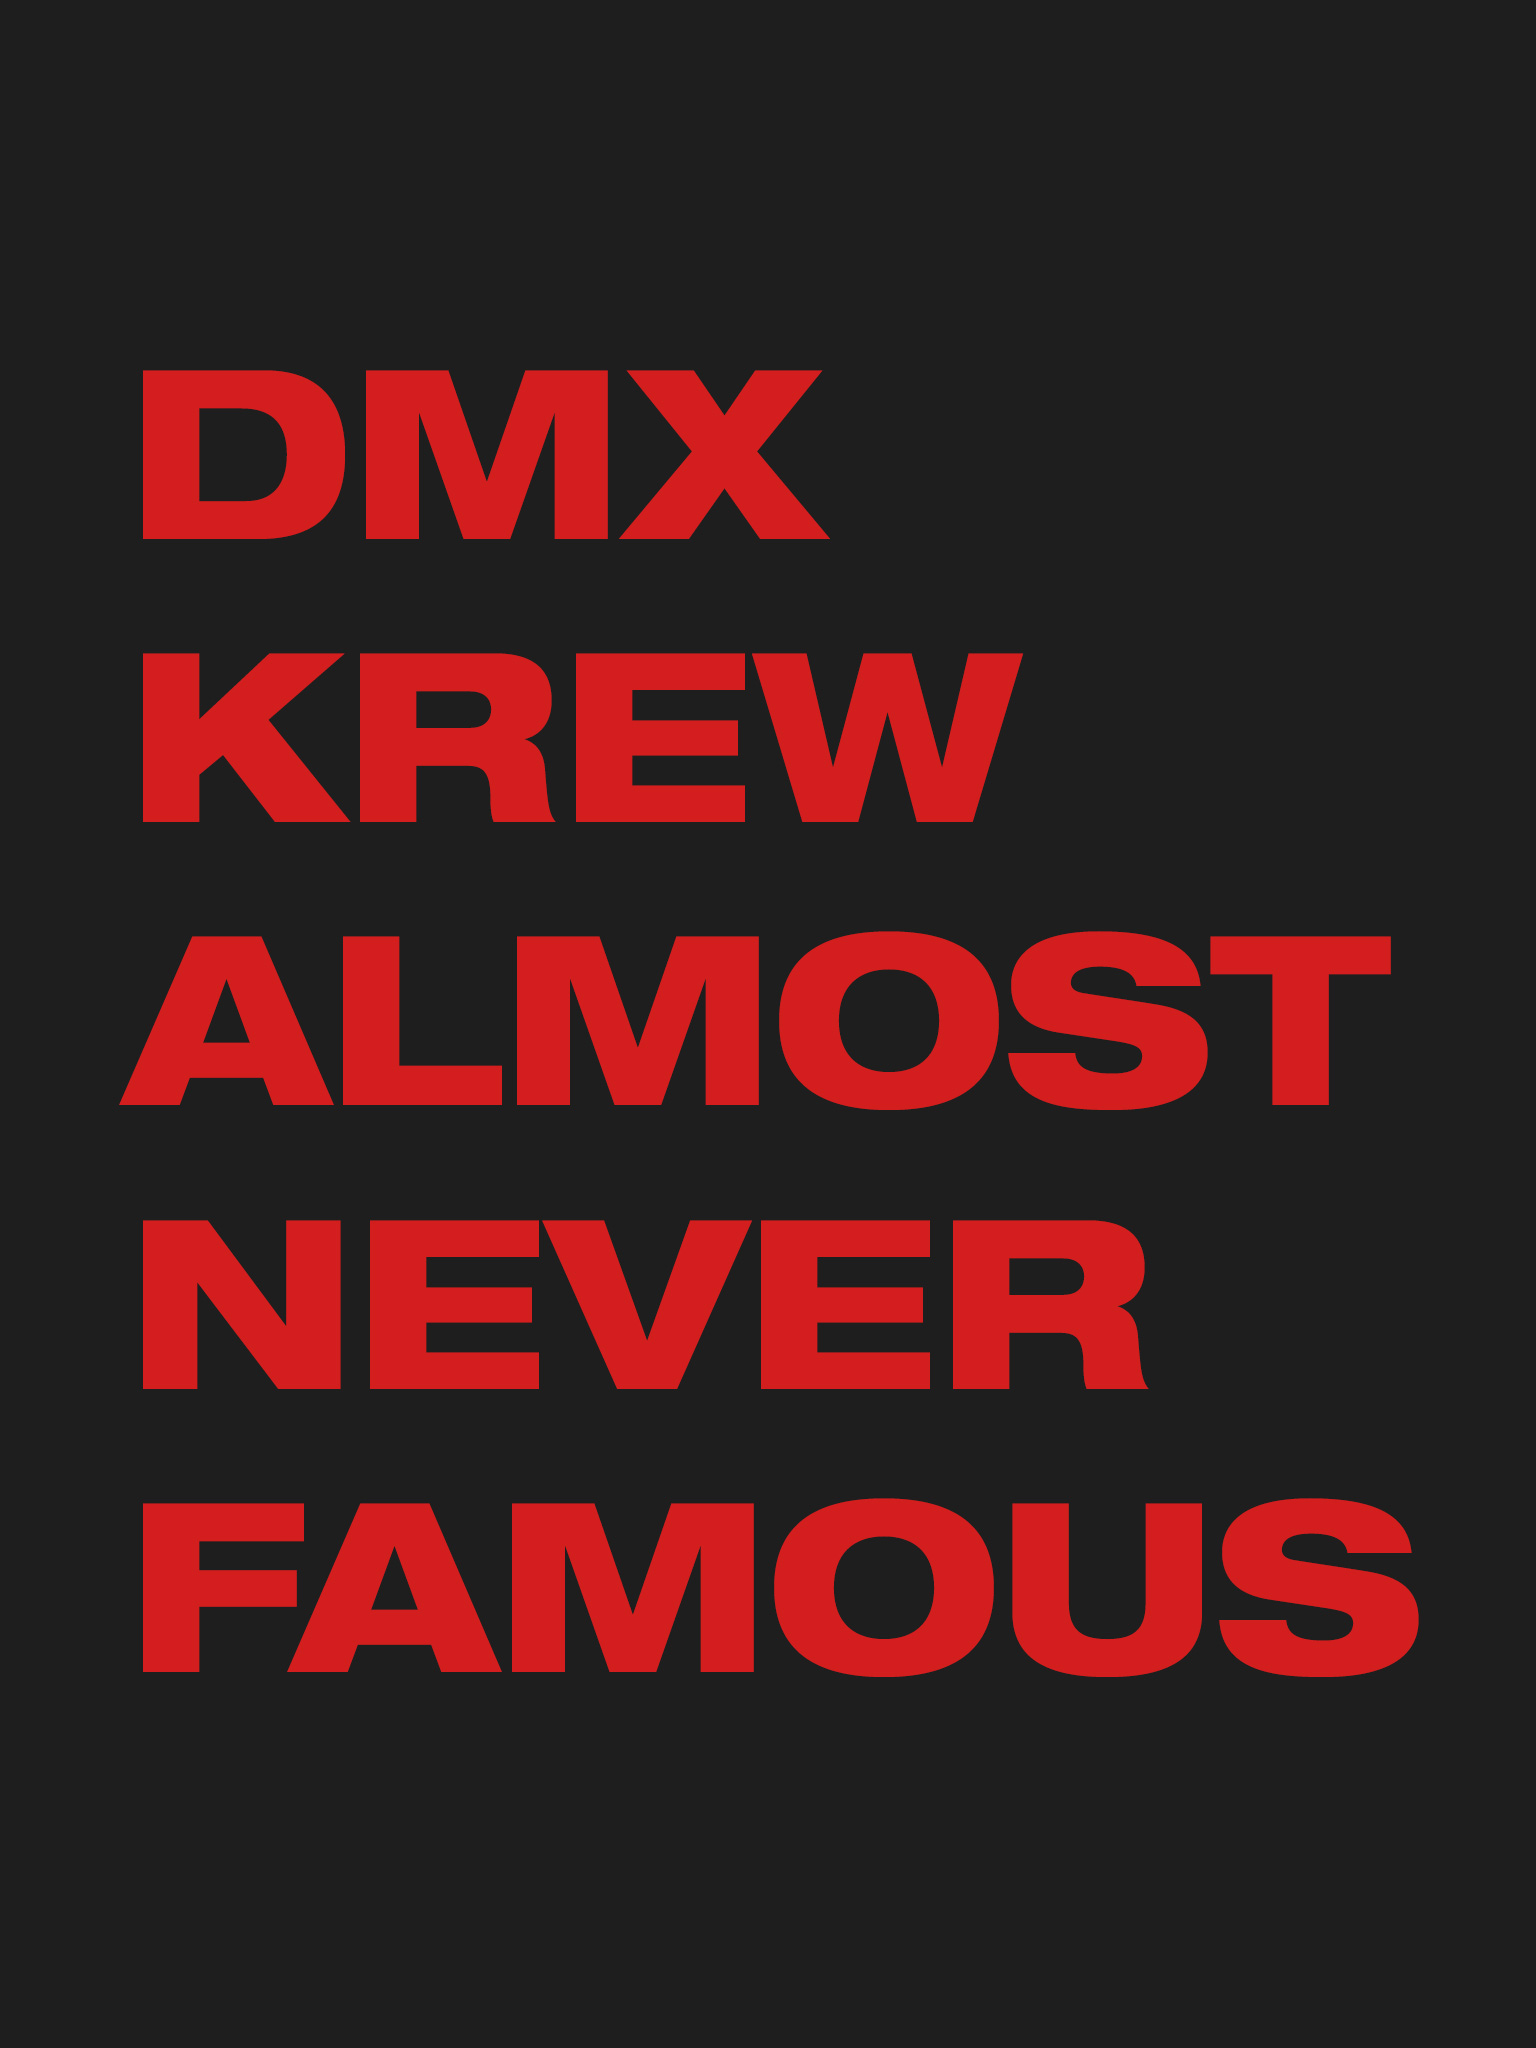 DMX Krew: Almost never famous